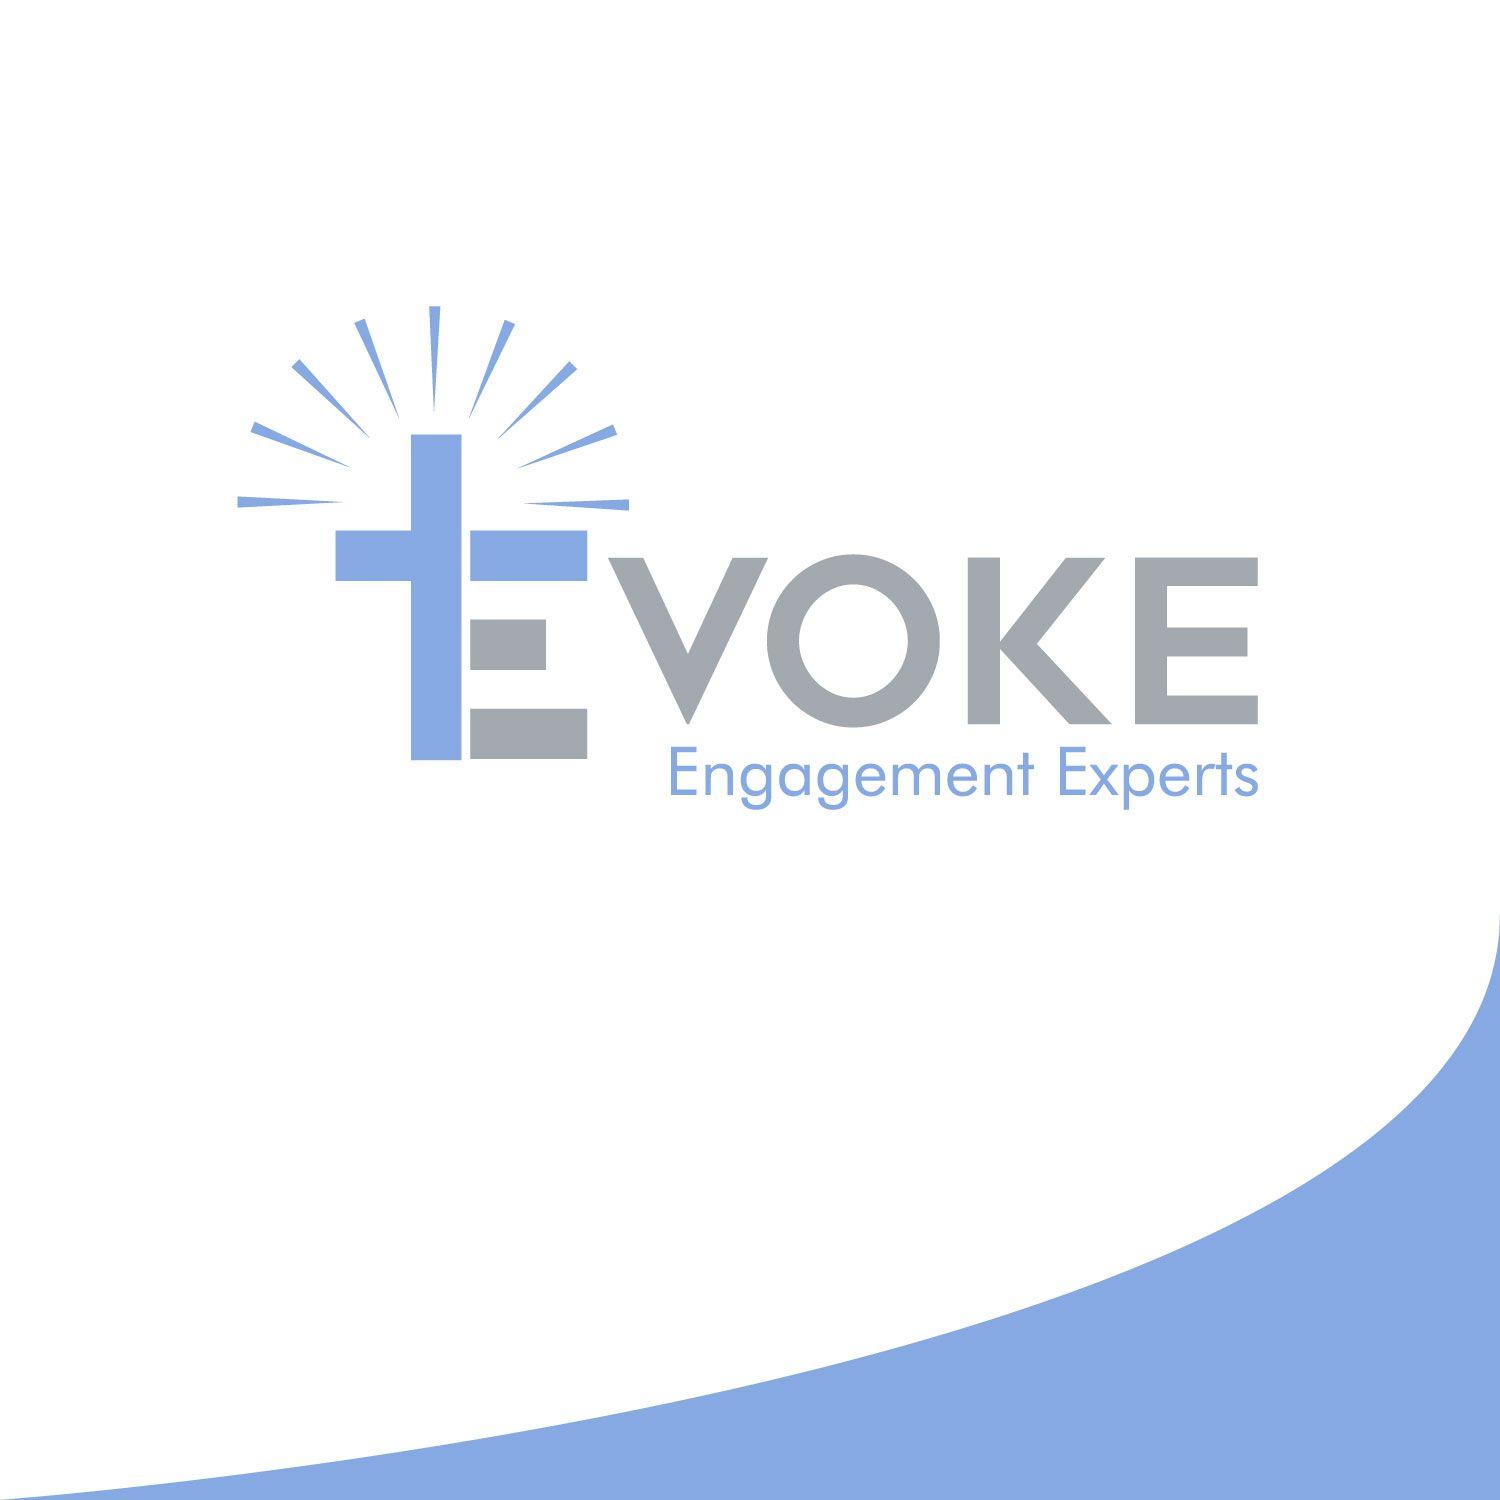 Freeman Company Logo - Bold, Modern Logo Design for Evoke by Freeman creation. Design